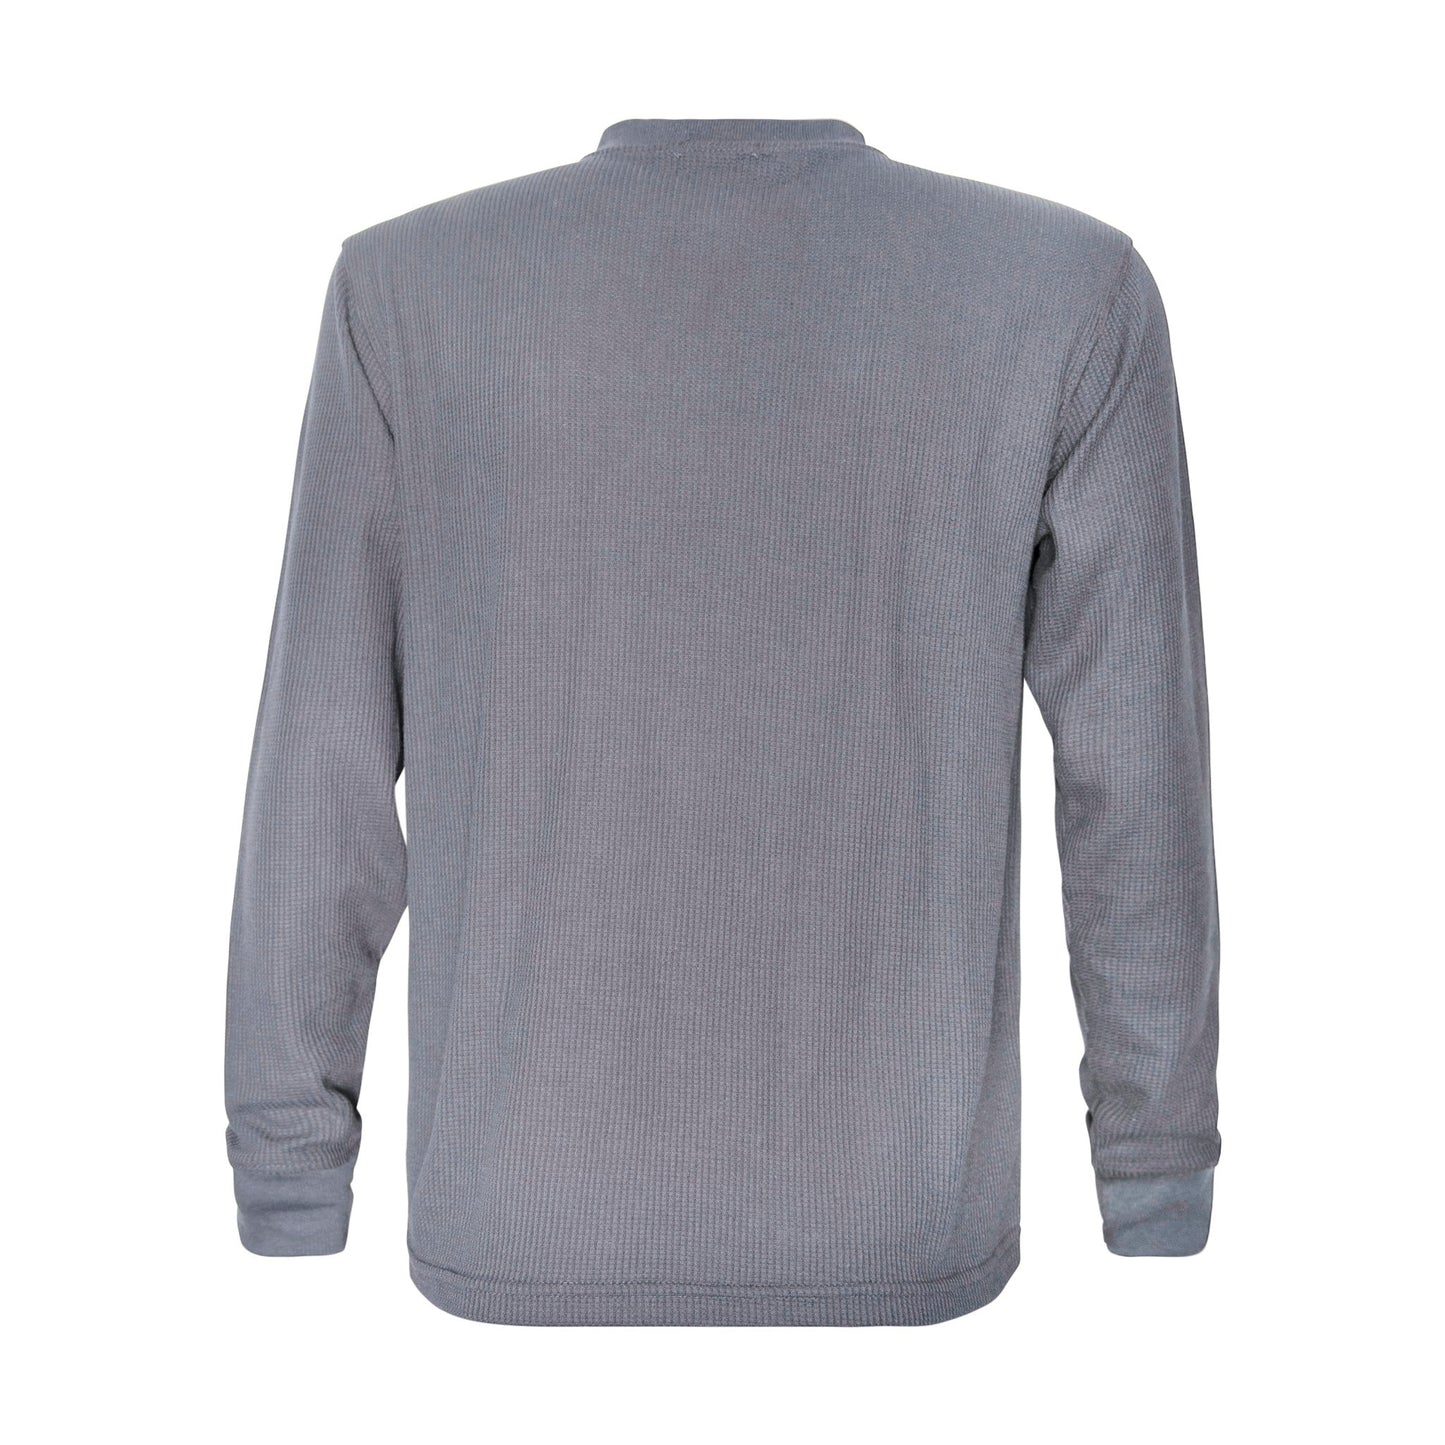 Henley Long Sleeve Top - Charcoal Grey